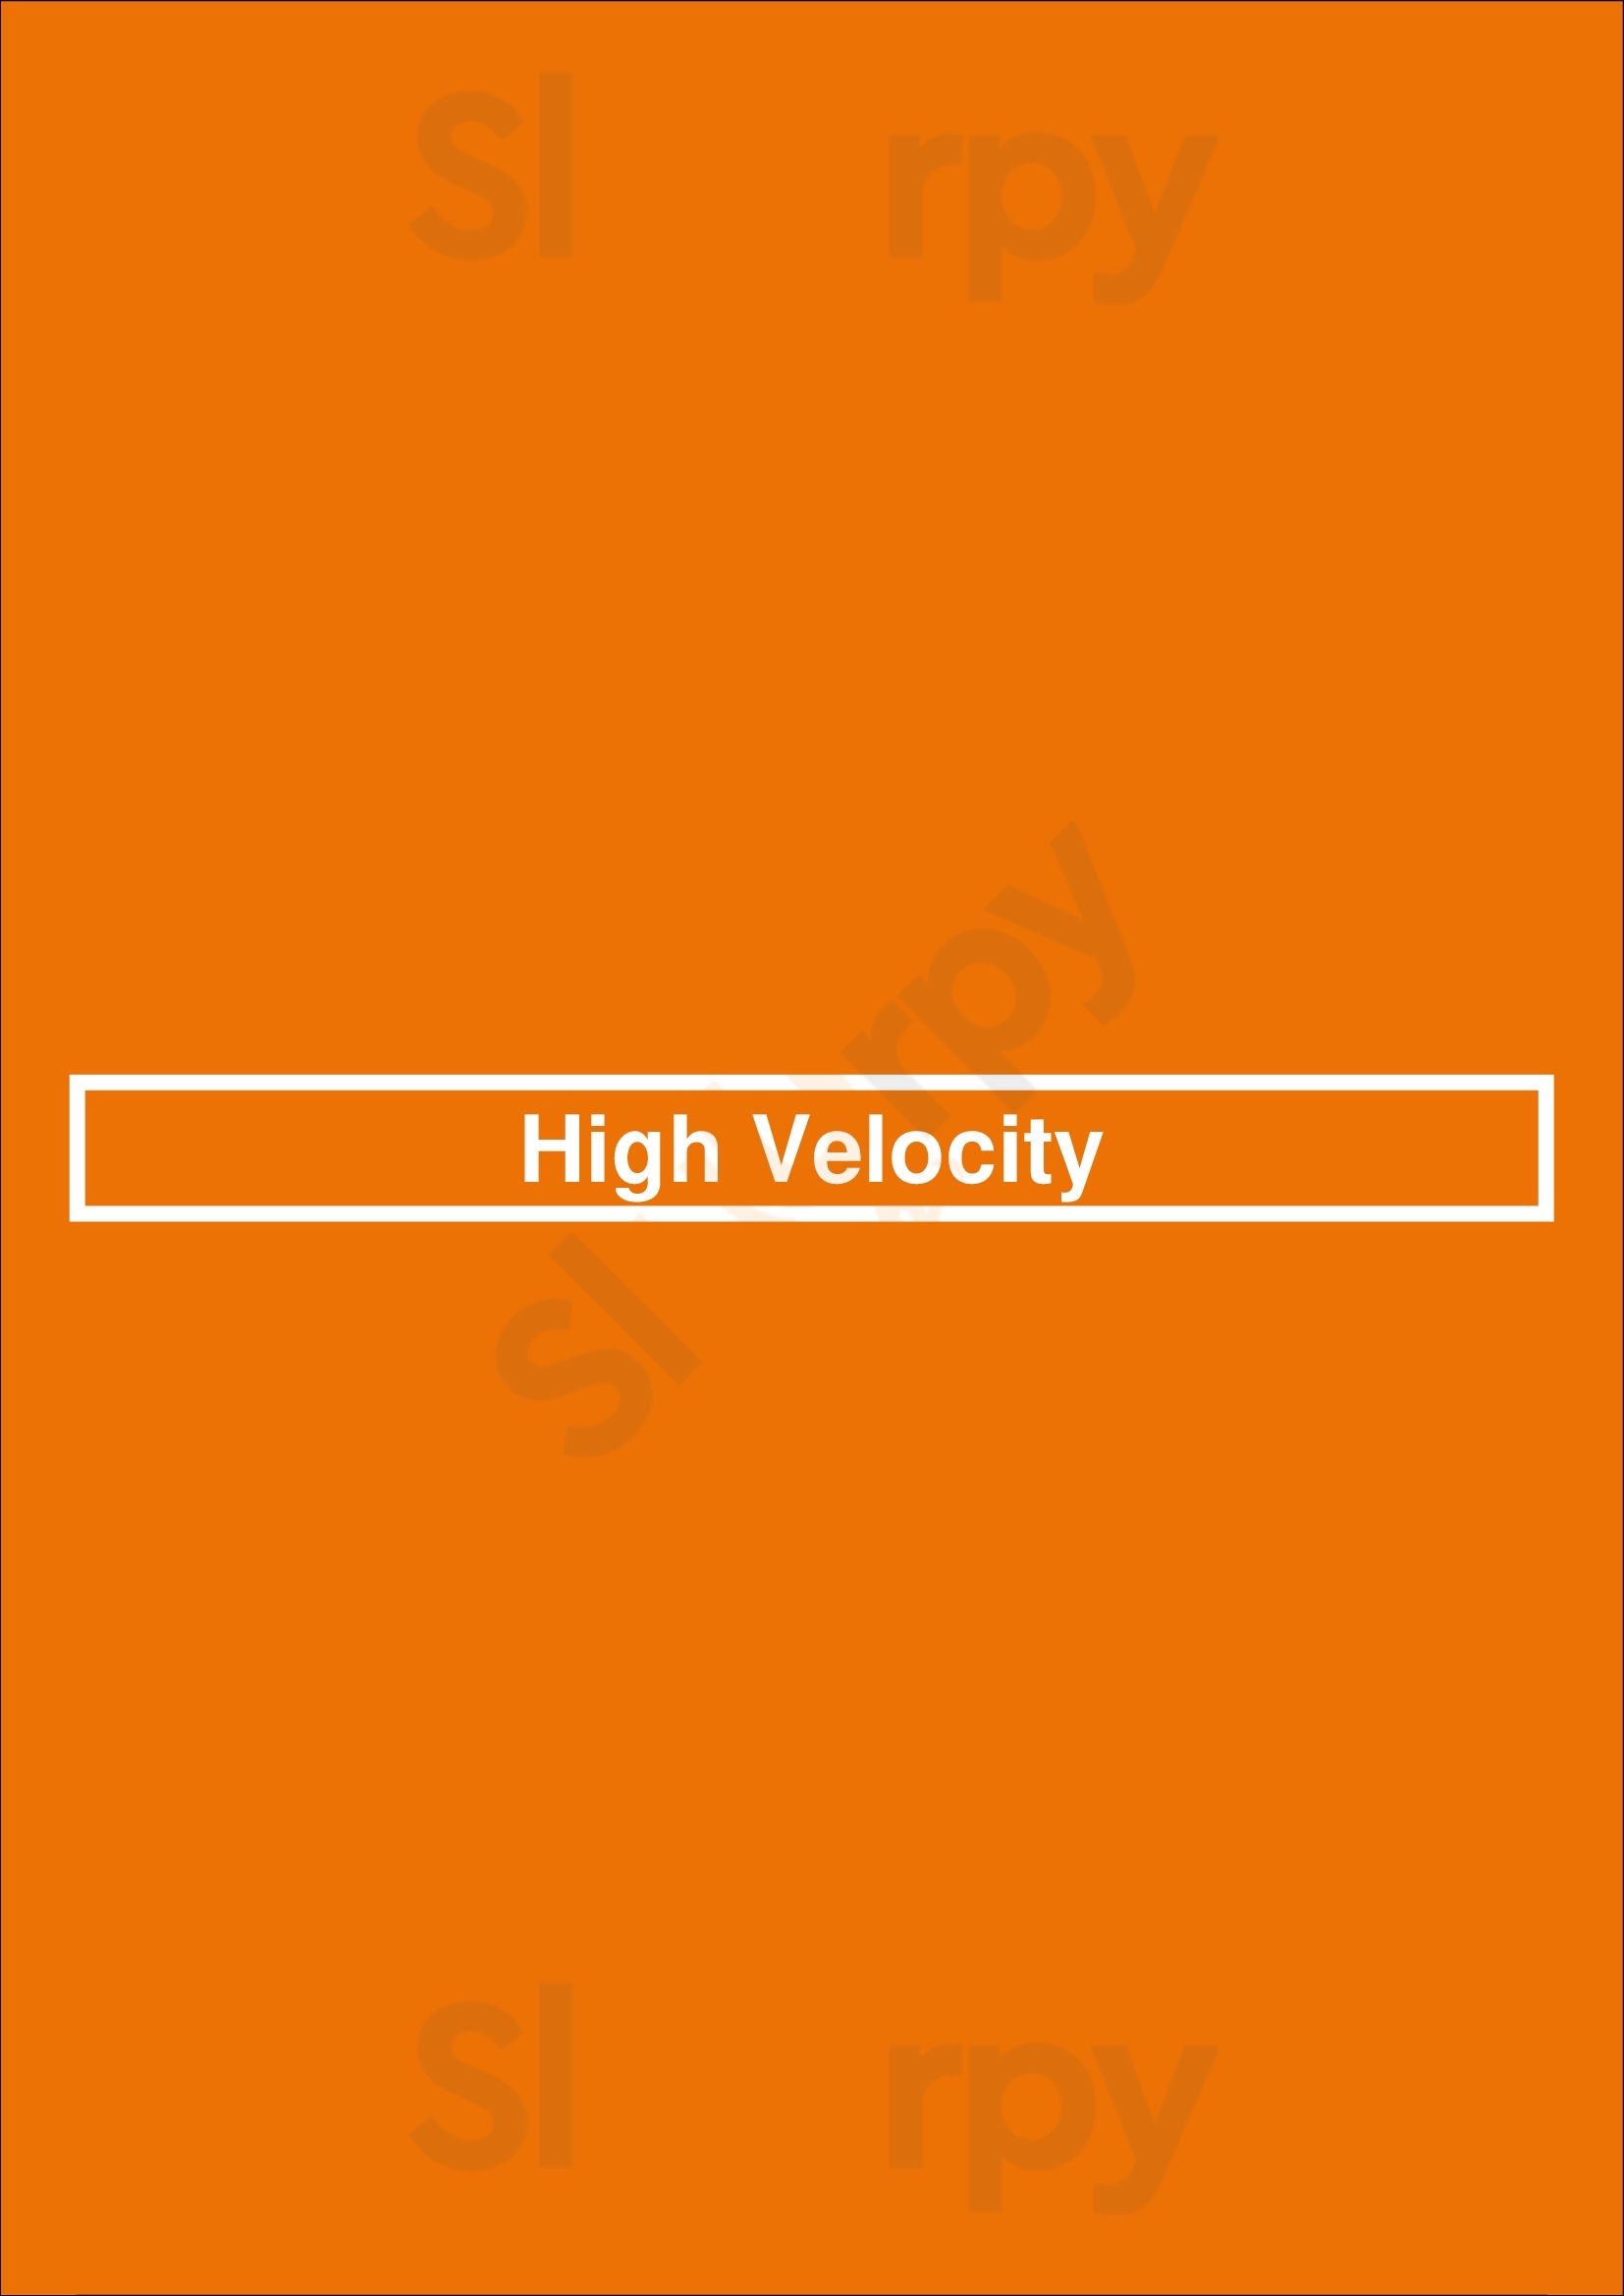 High Velocity Indianapolis Menu - 1